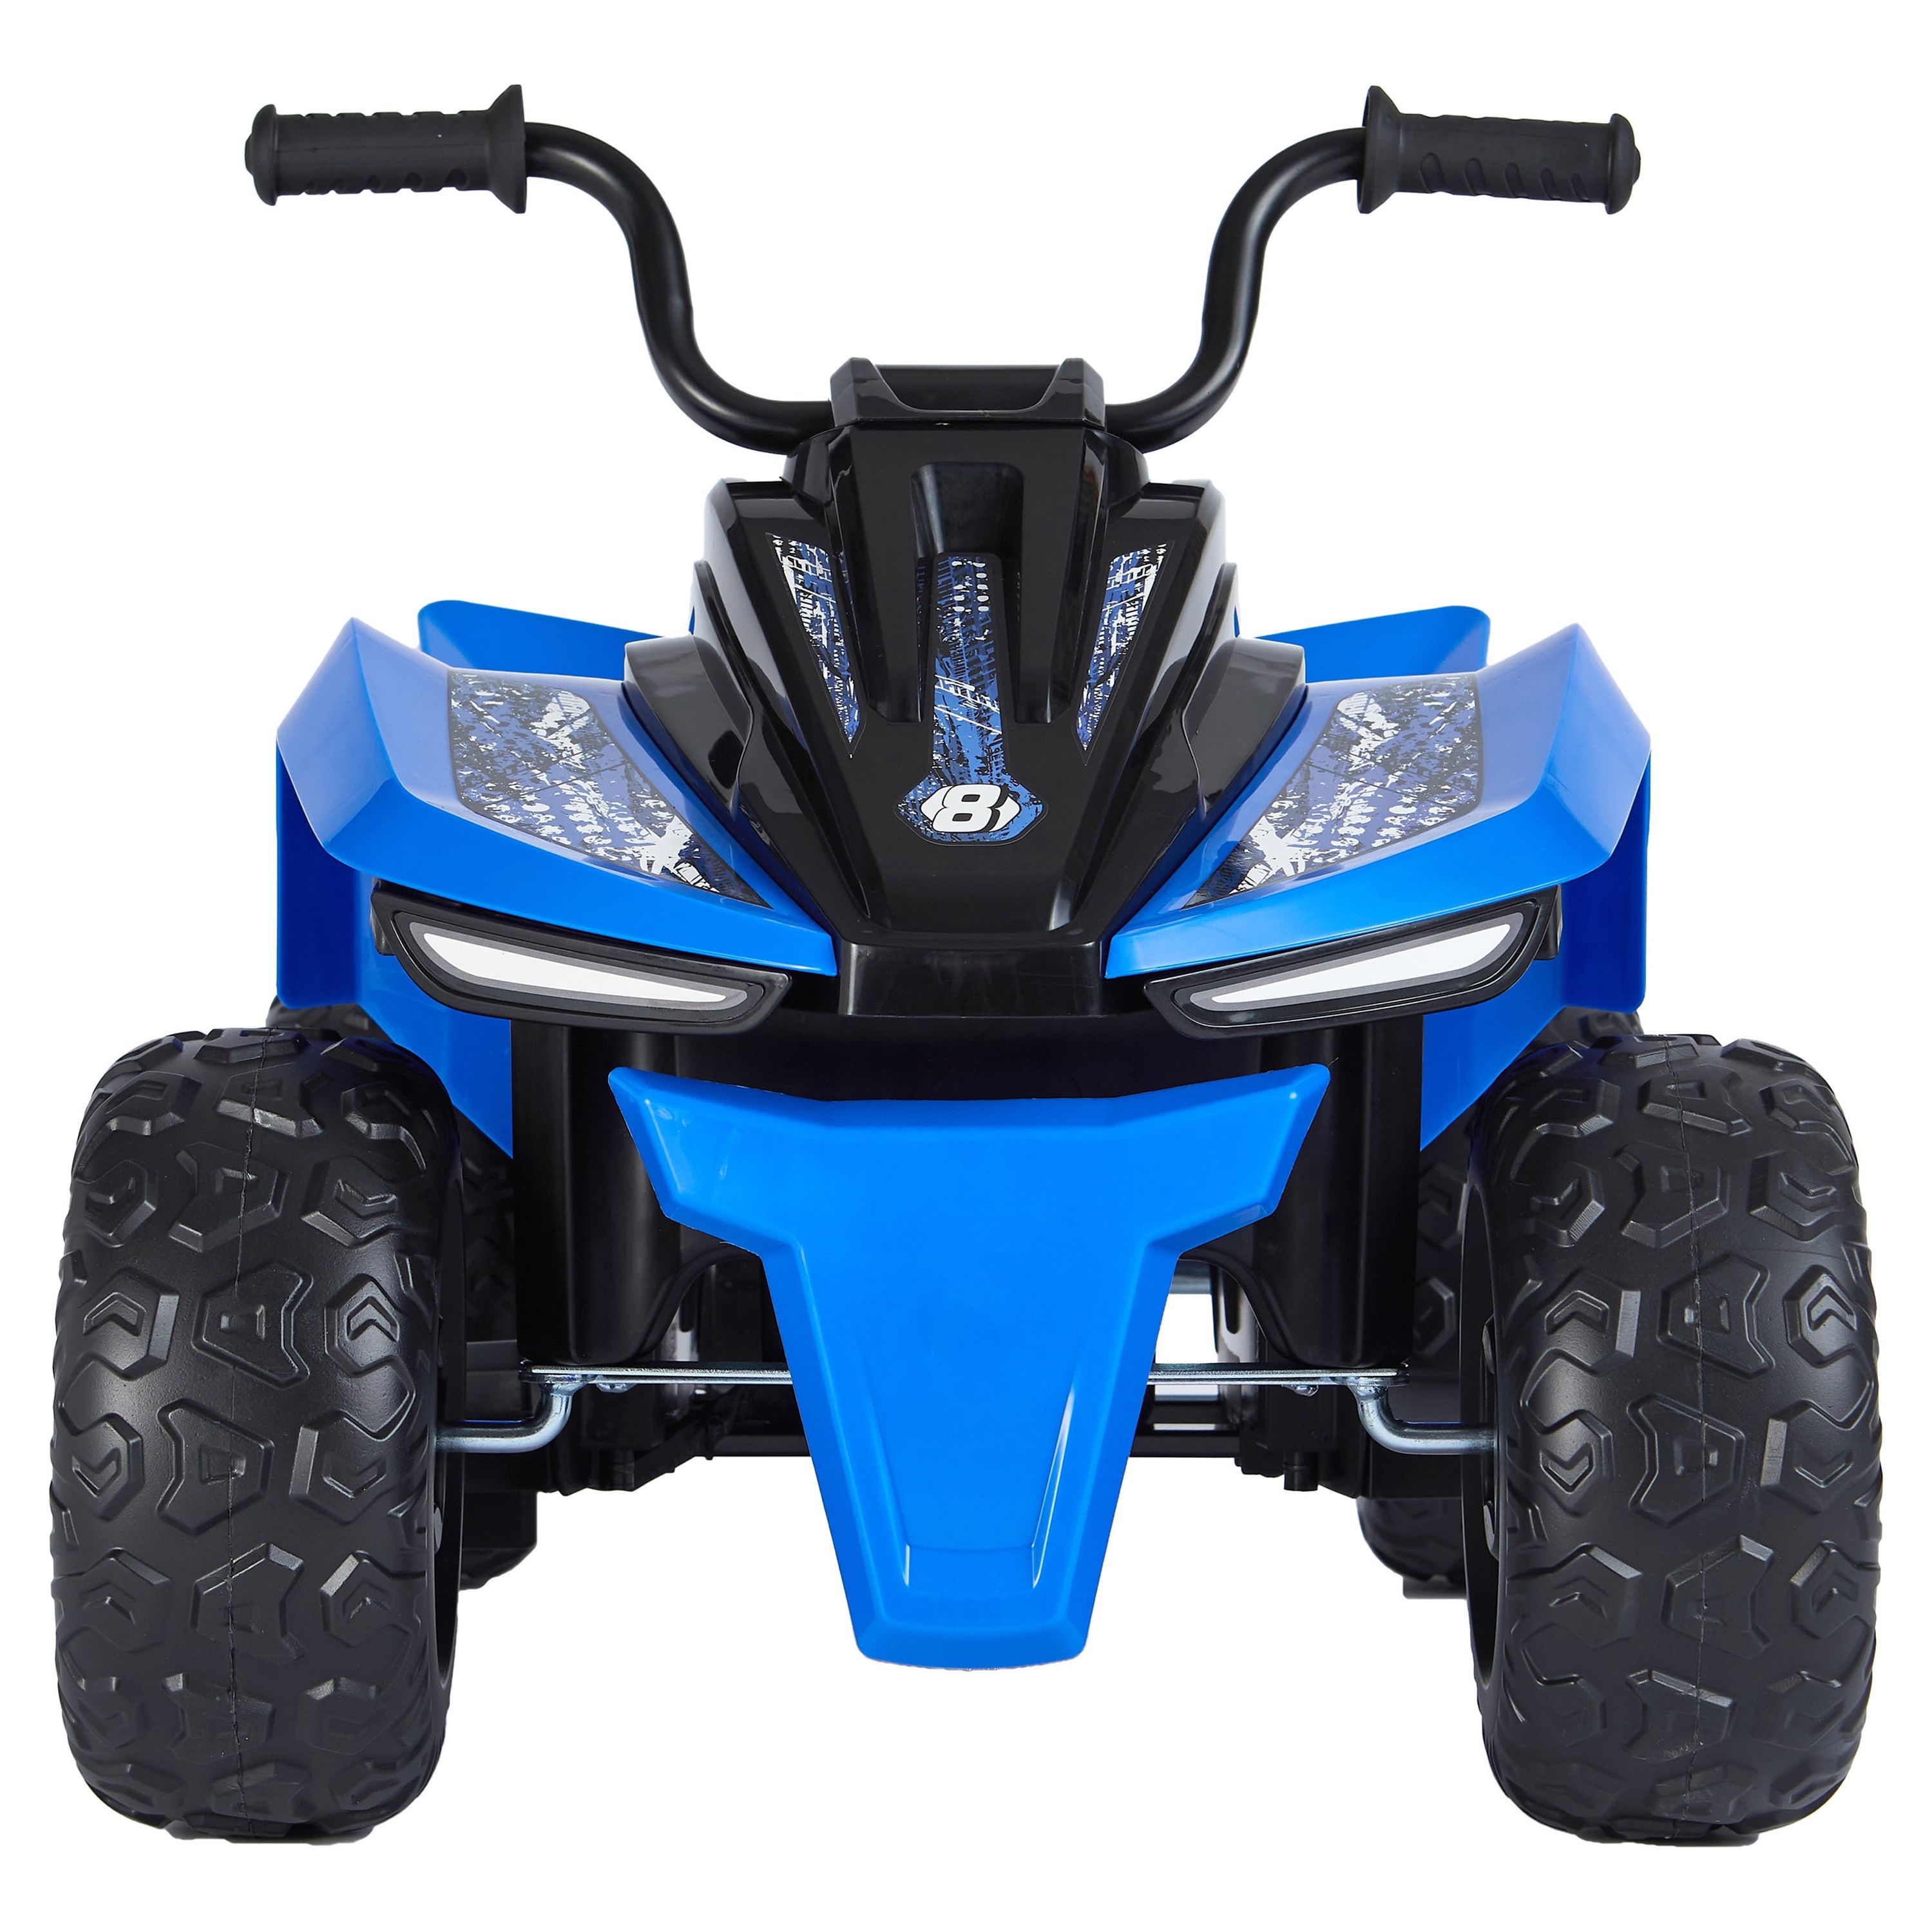 Kalee 6 Volt Trail Racer Blue ATV Battery Powered Ride-on - image 1 of 7